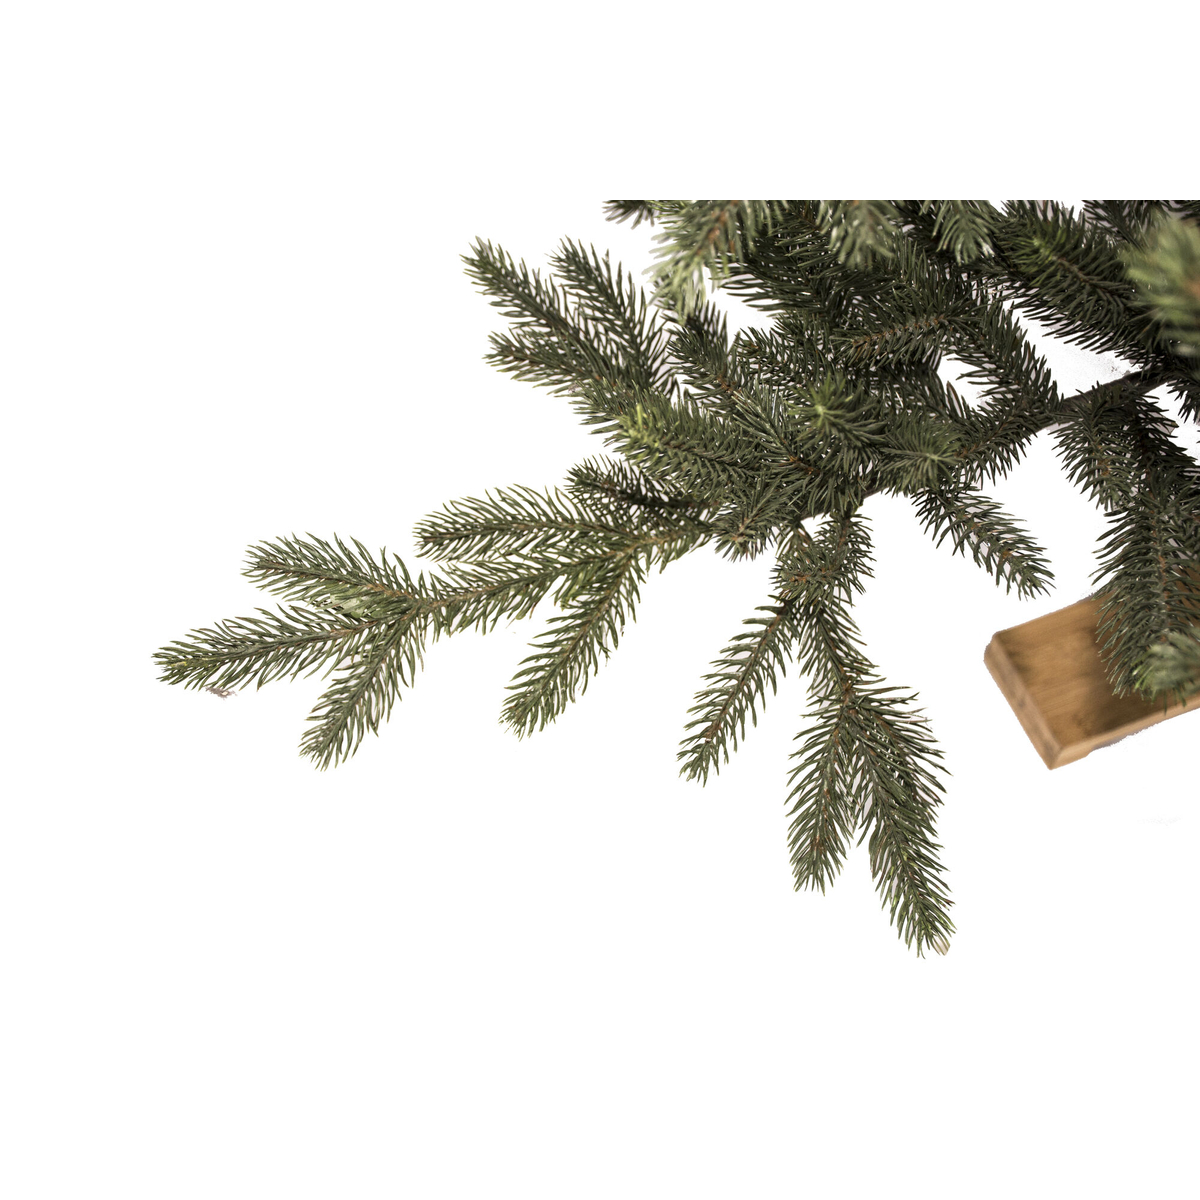 Our Nordic Christmas kunstkerstboom 228cm Arkansas Dark Green